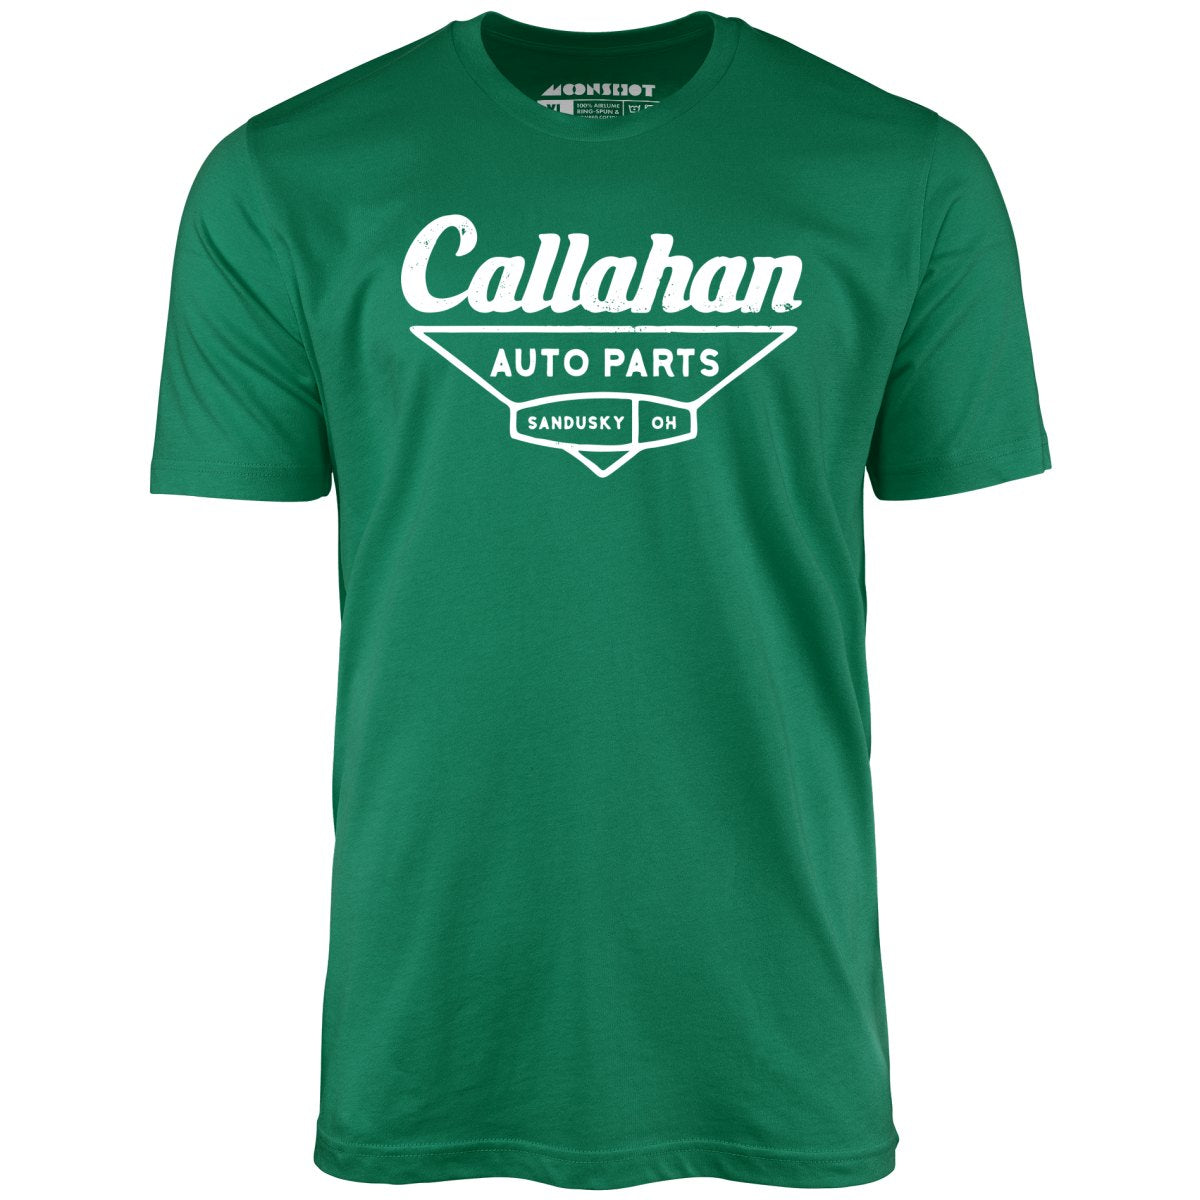 Callahan Auto Parts - Unisex T-Shirt